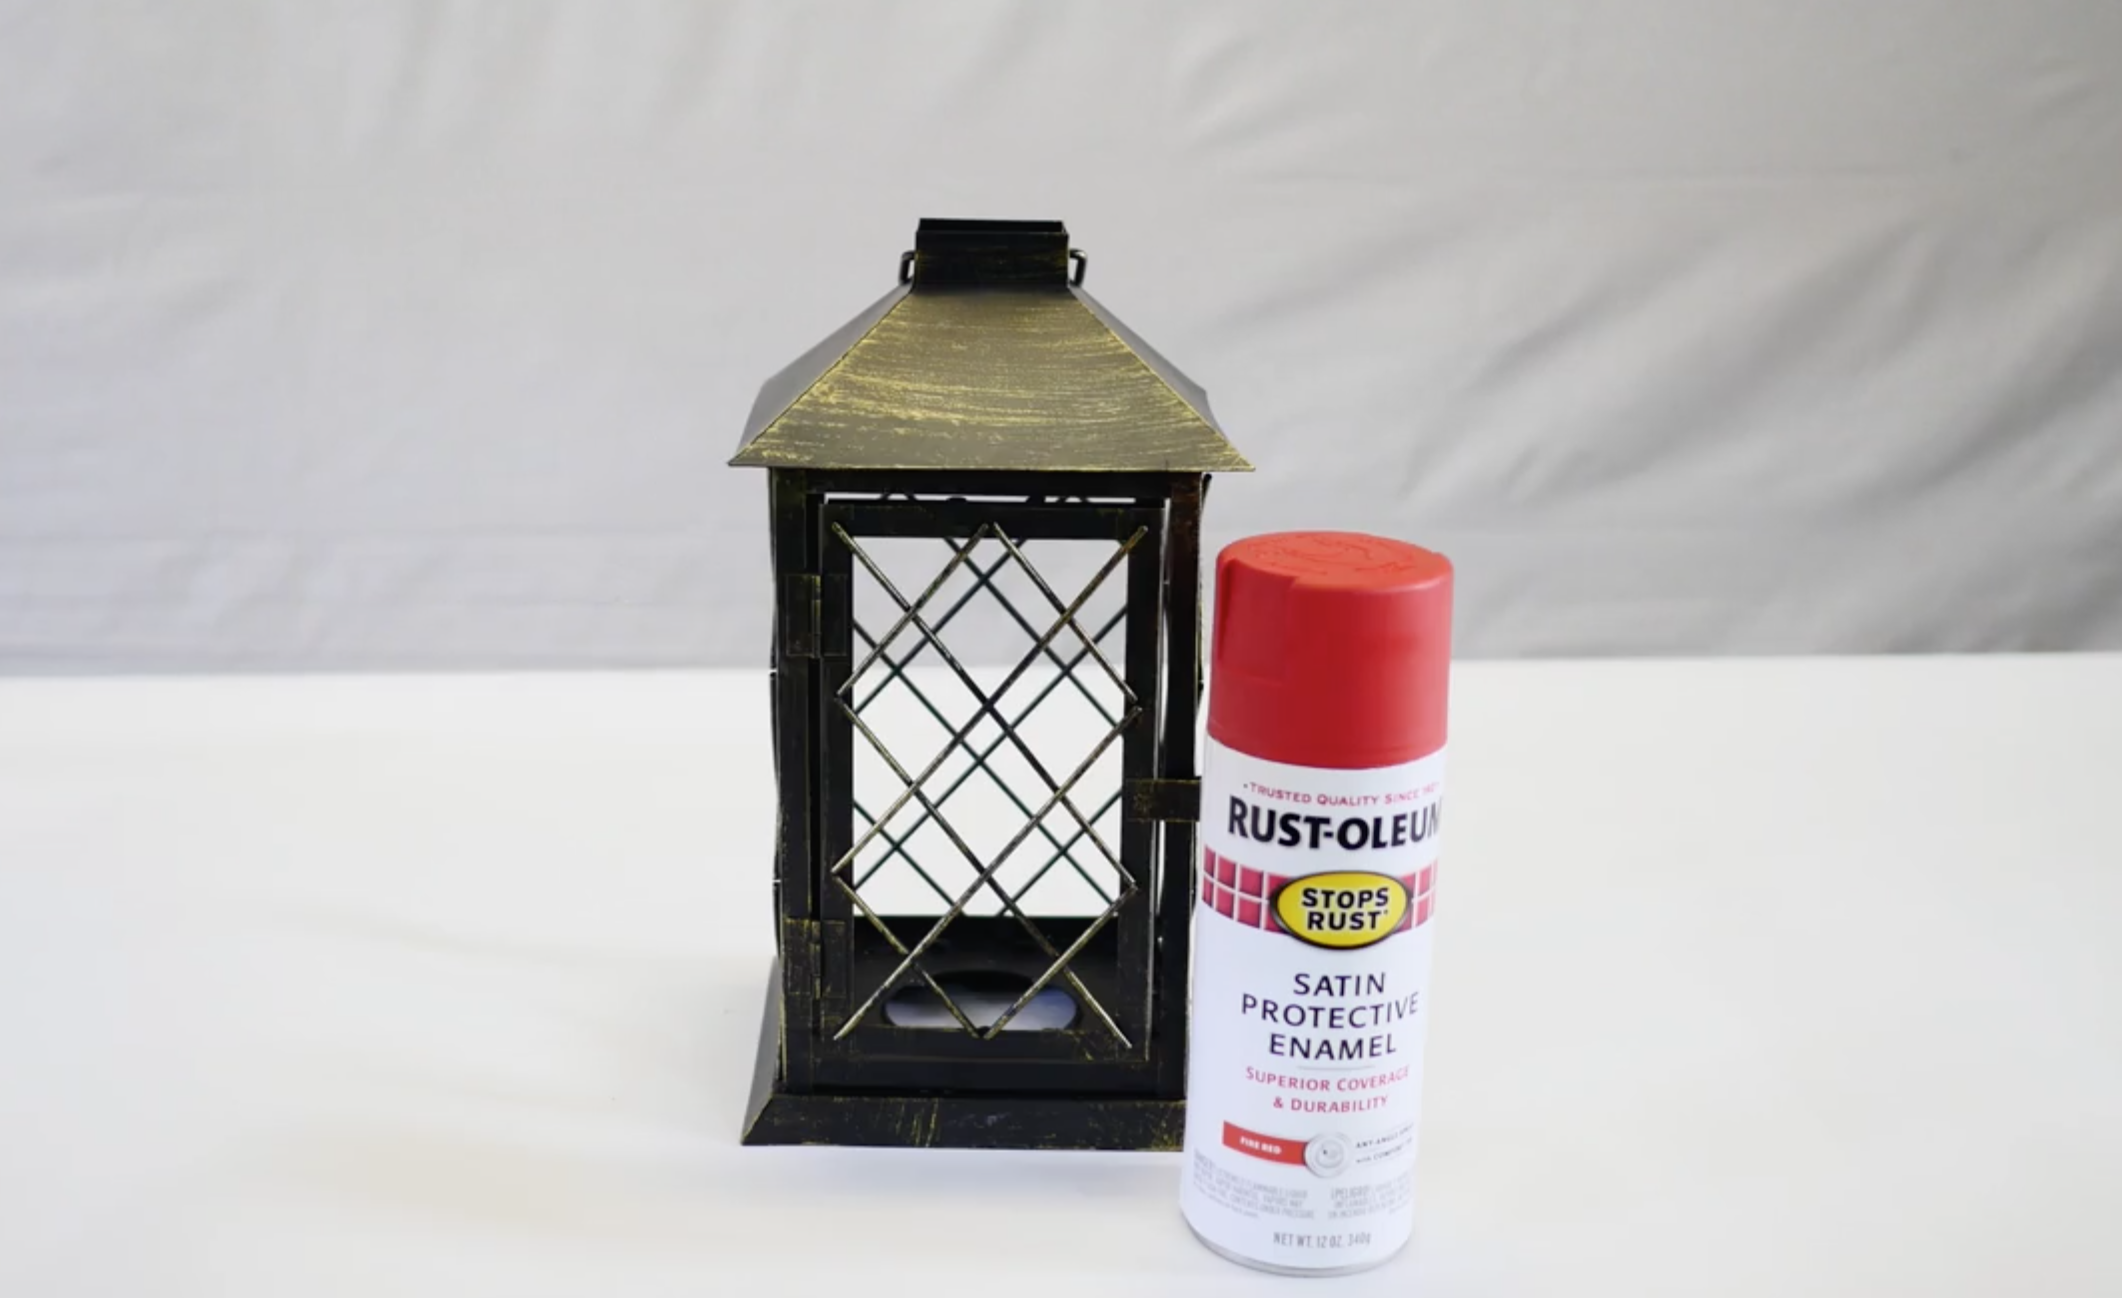 Spray painting a metal lantern